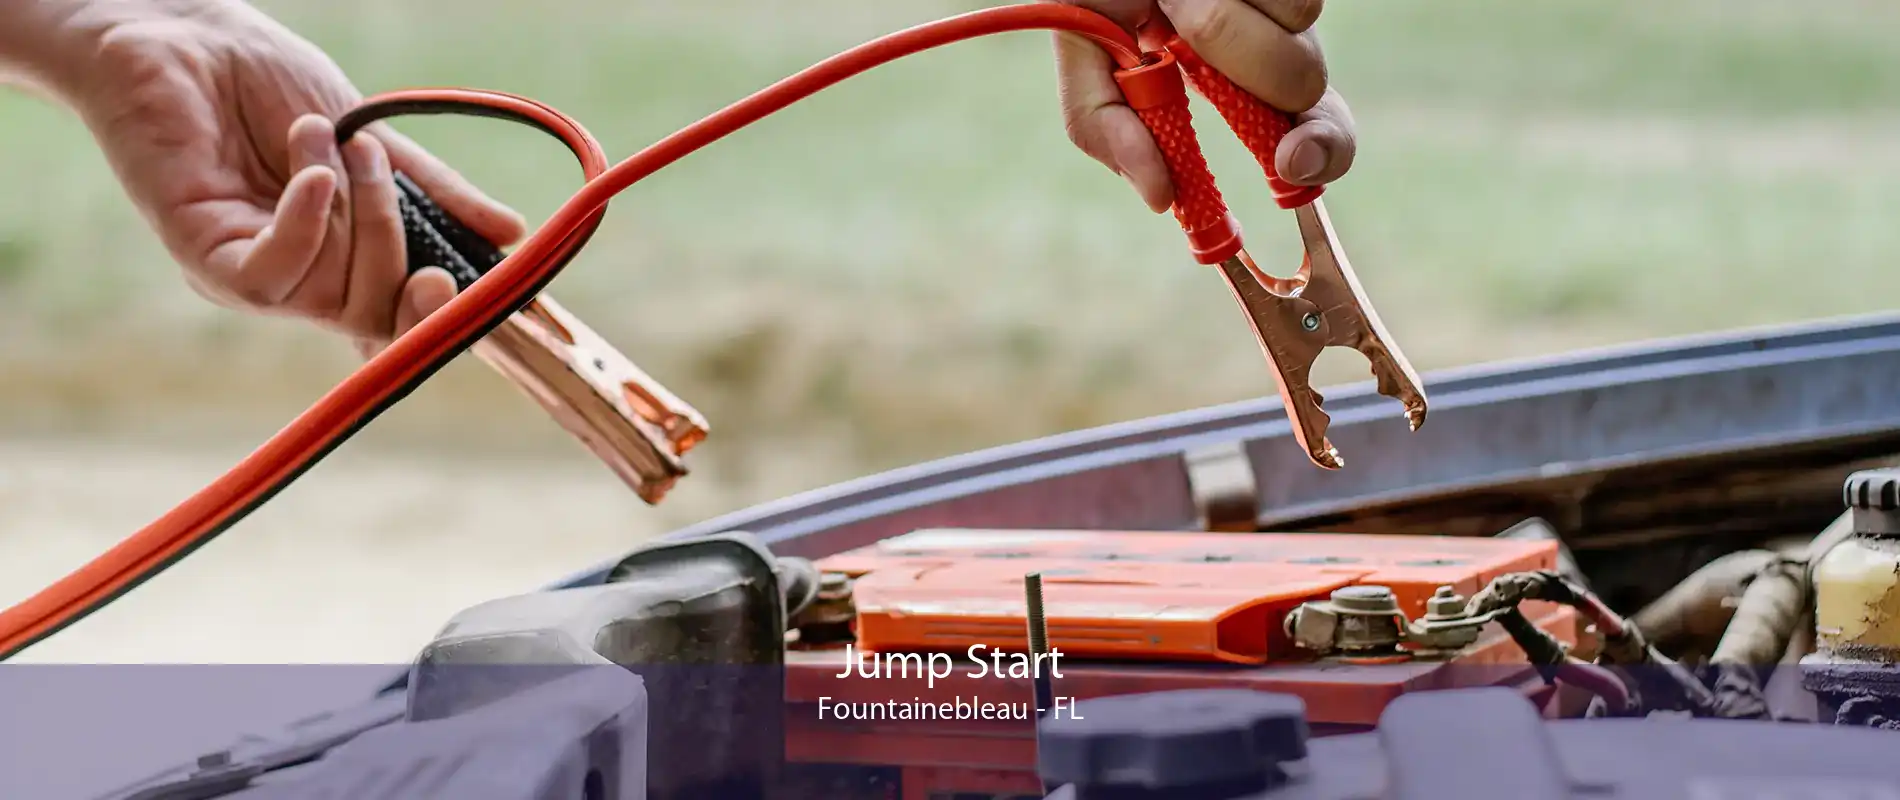 Jump Start Fountainebleau - FL